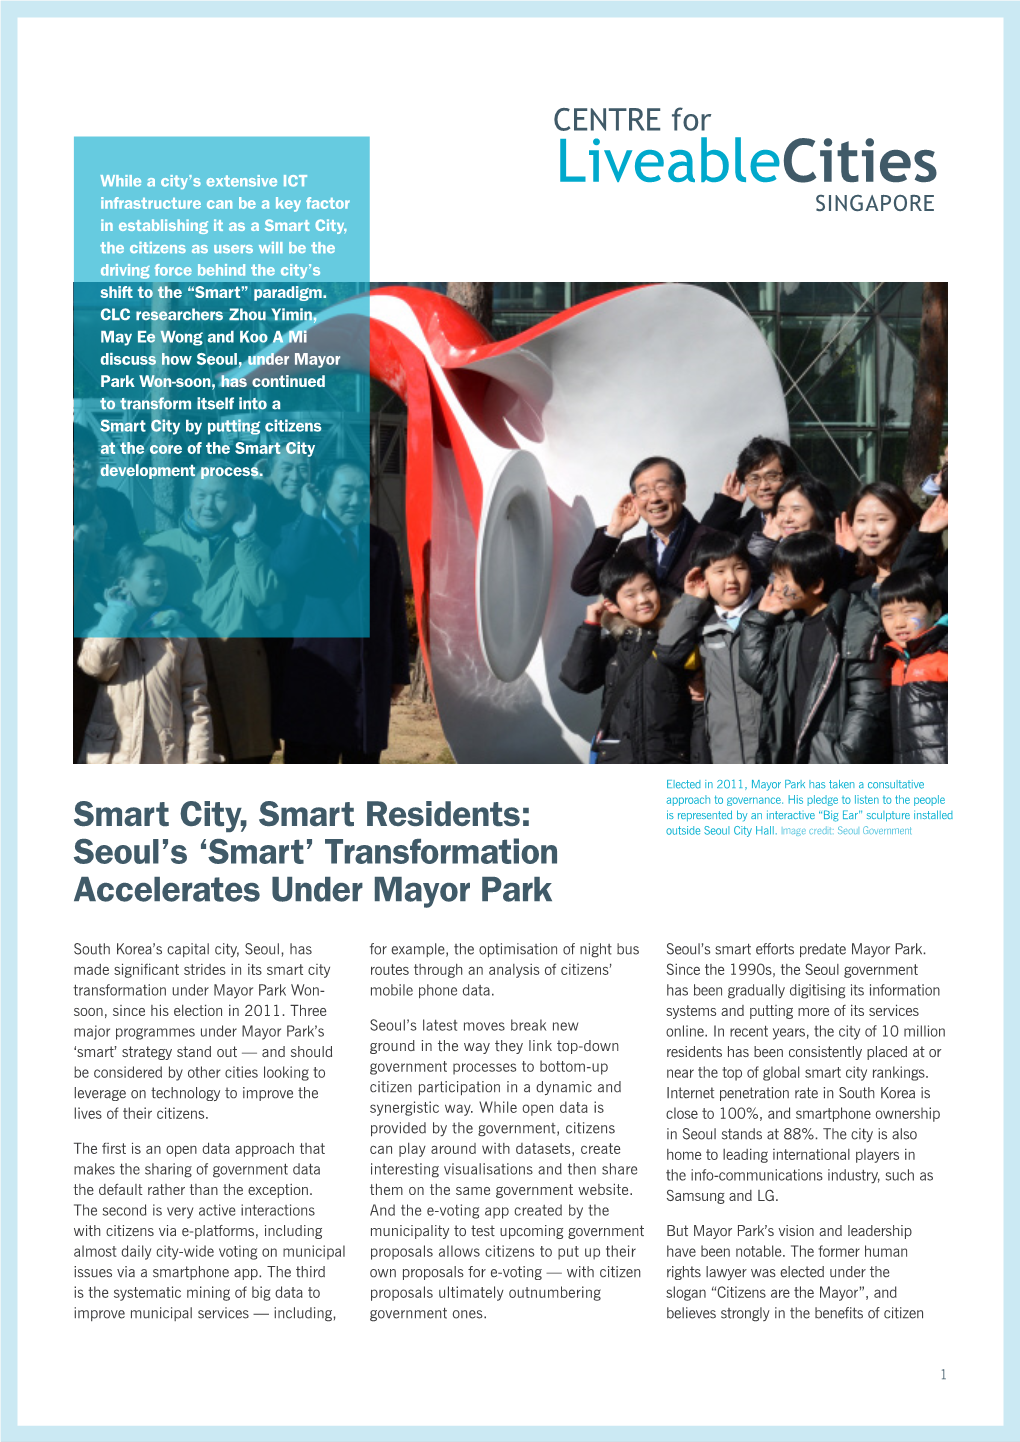 Smart City, Smart Residents: Seoul's